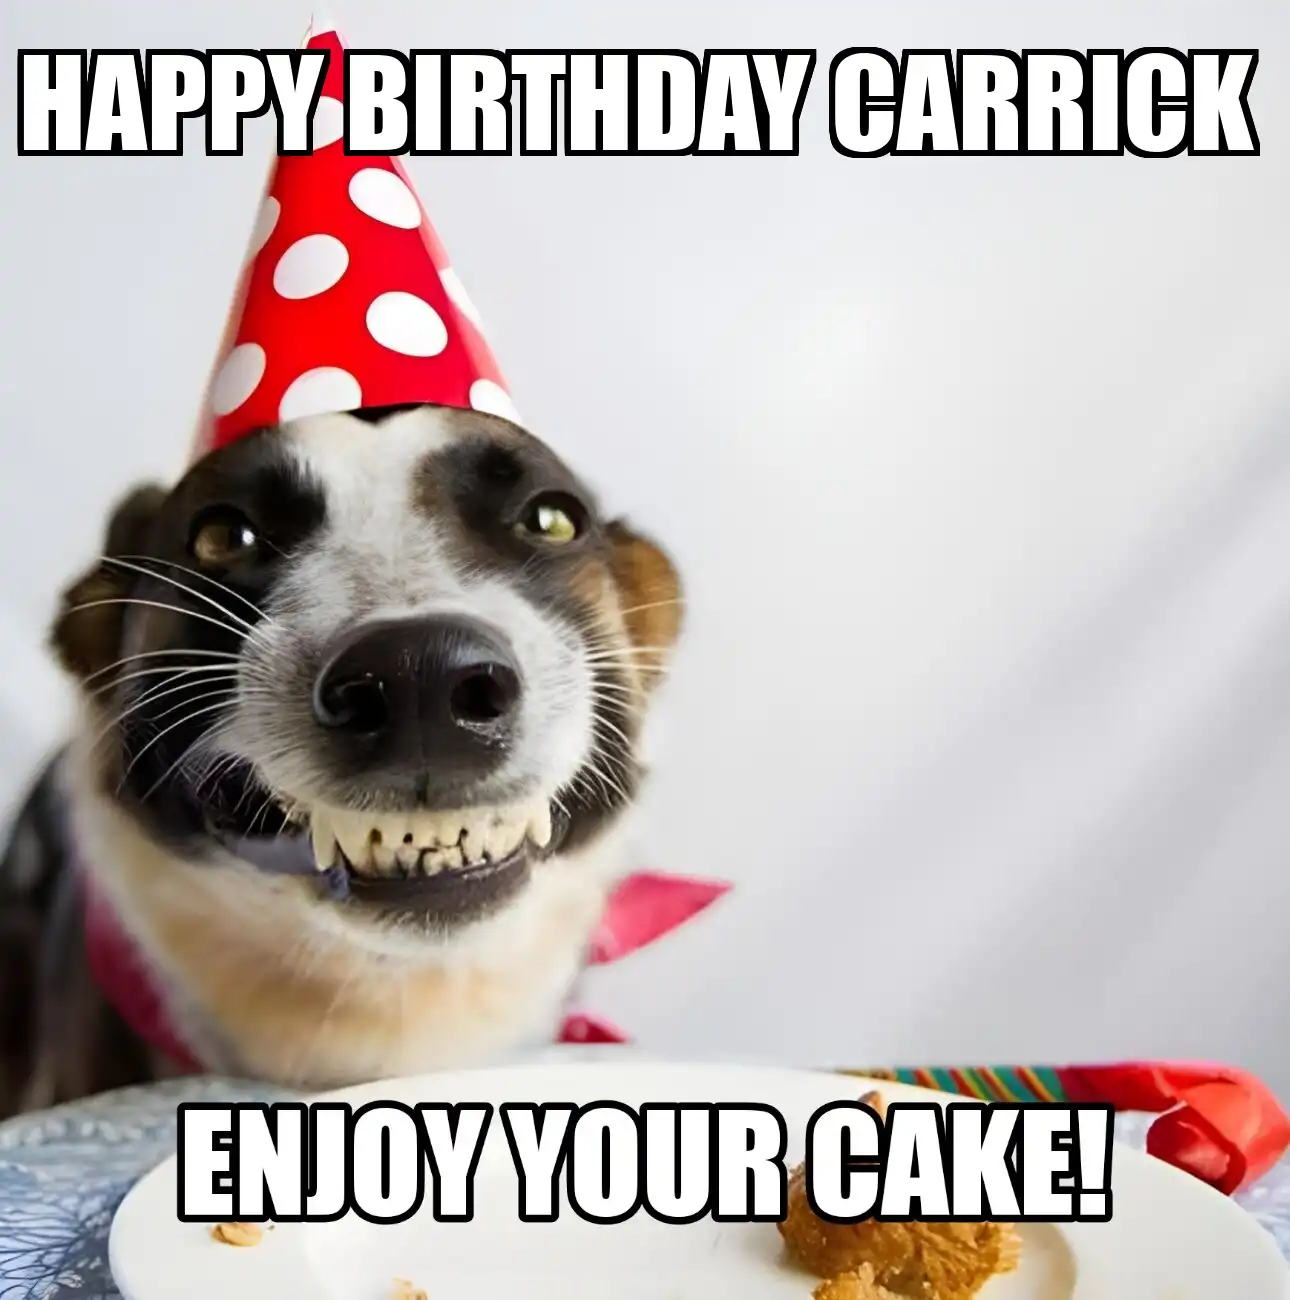 Happy Birthday Carrick Enjoy Your Cake Dog Meme